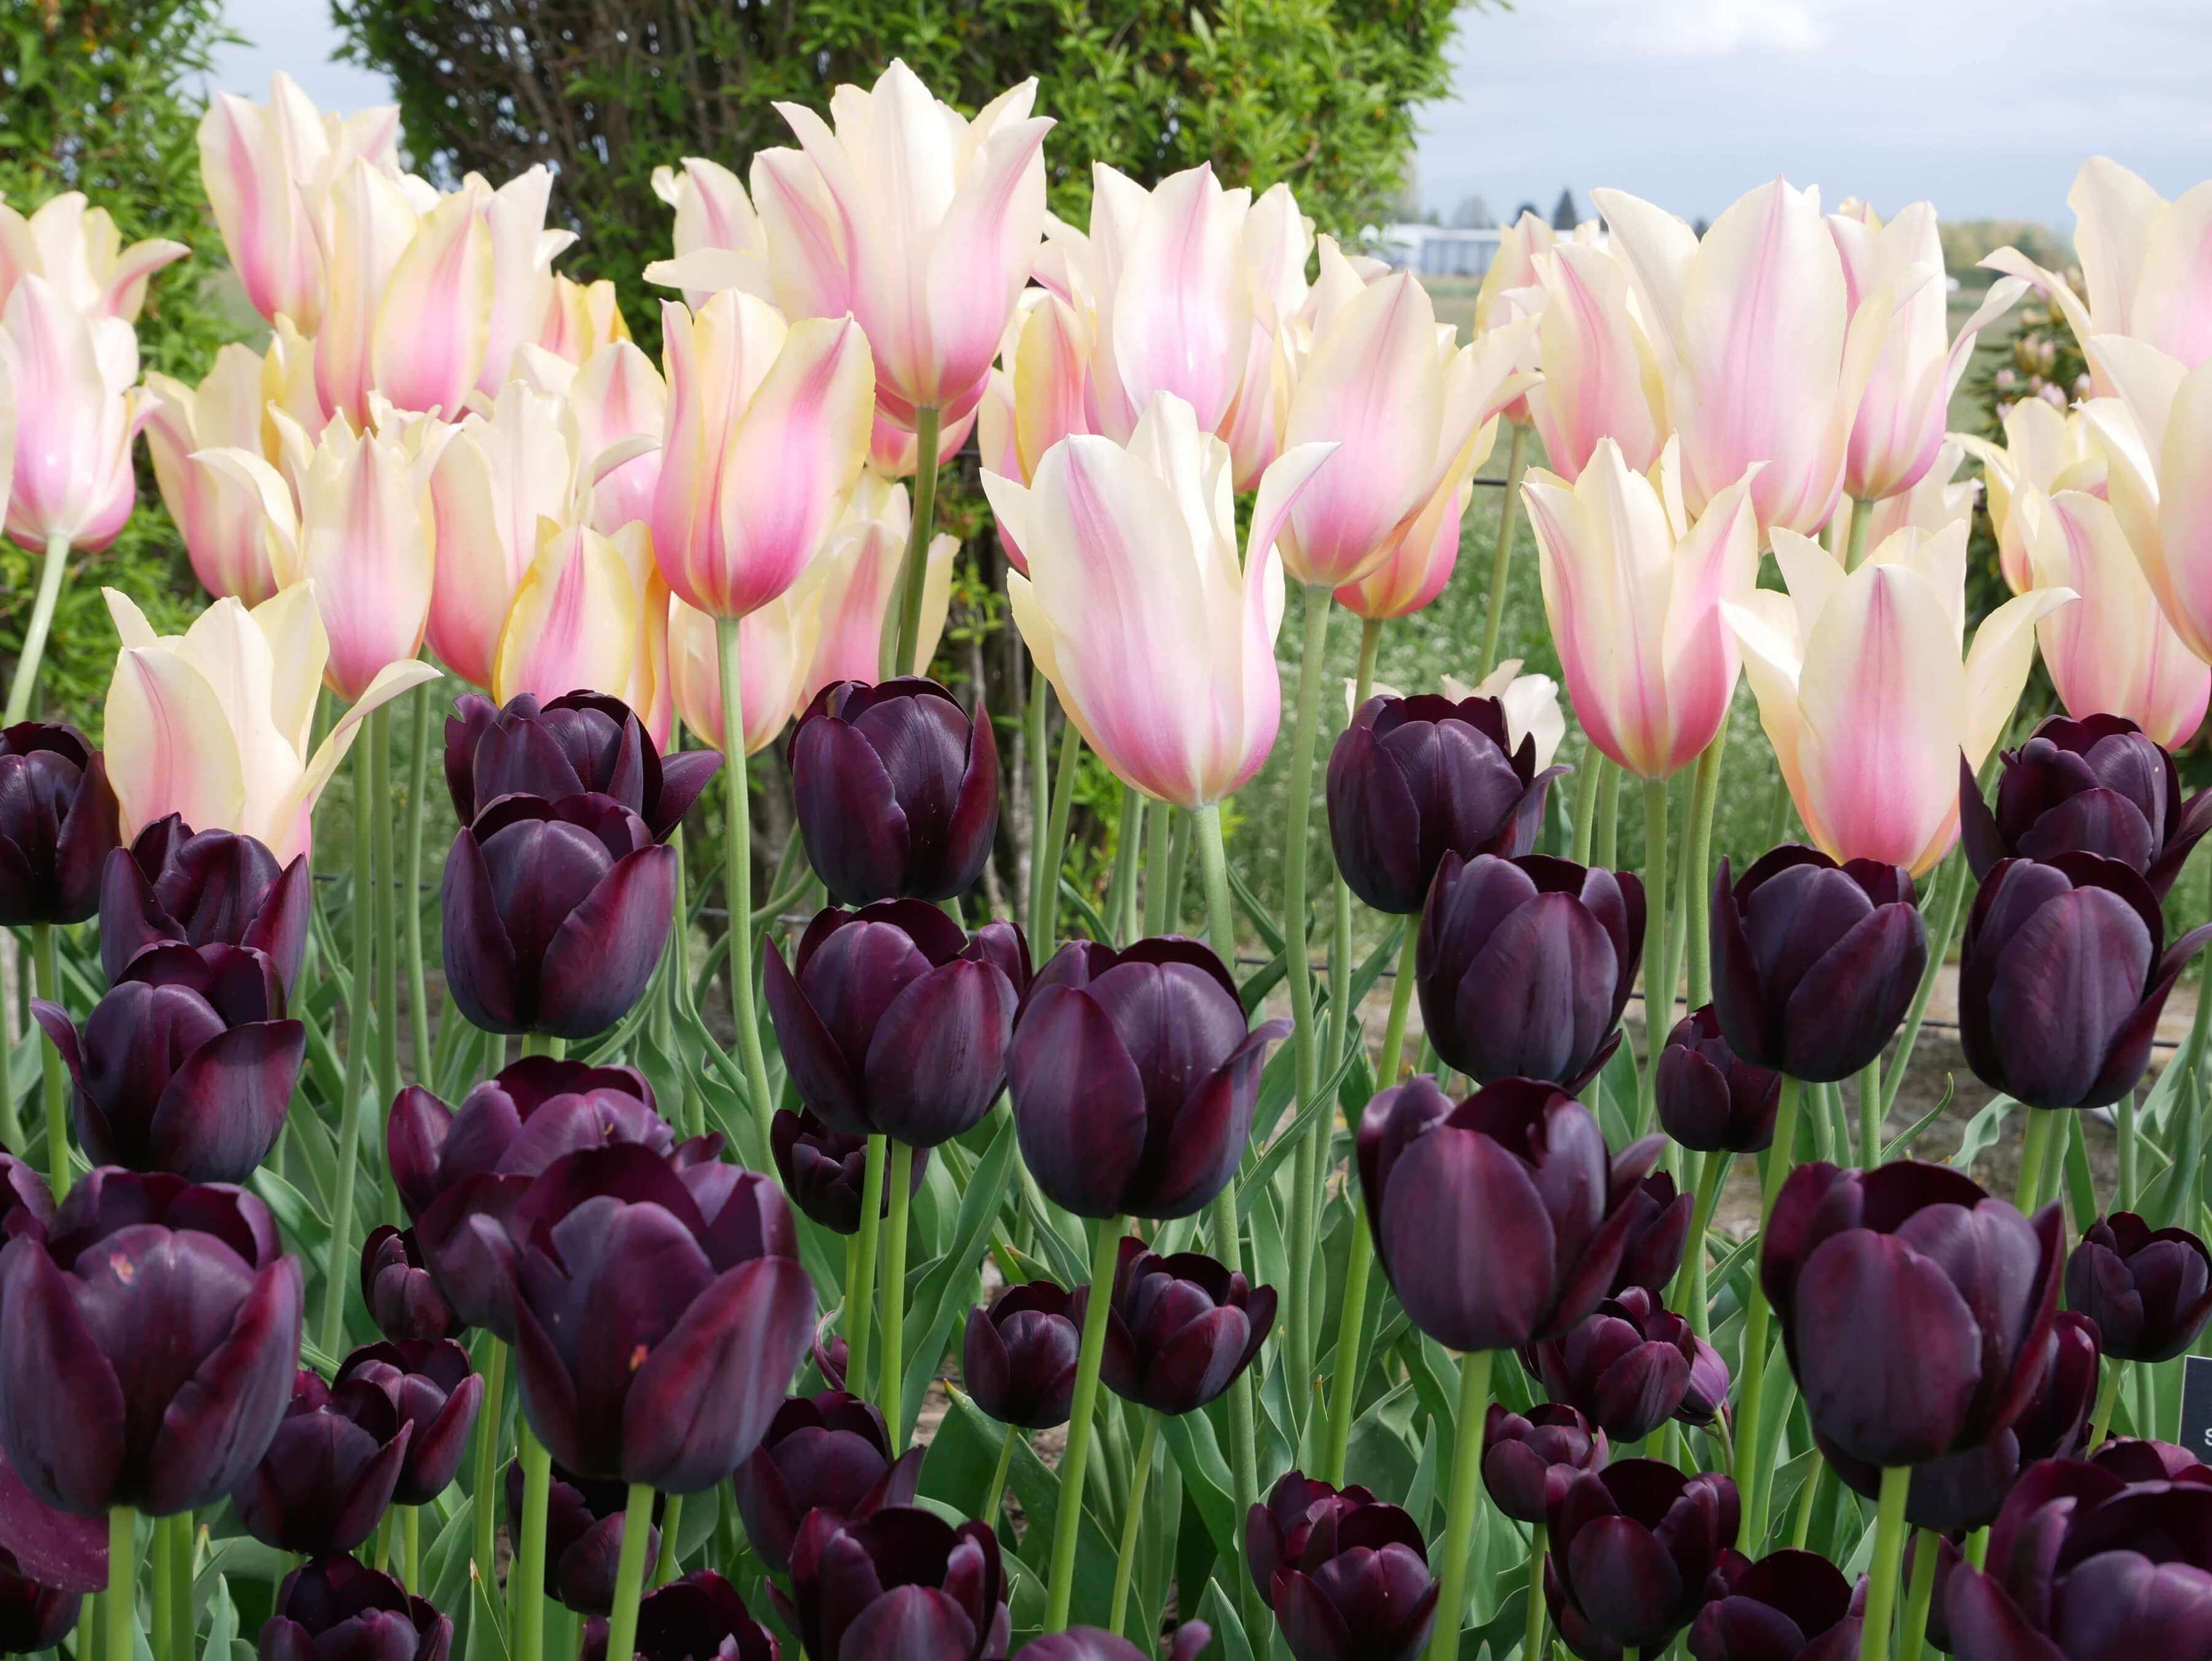 dark purple tulips at the Skagit Valley Tulip Festival